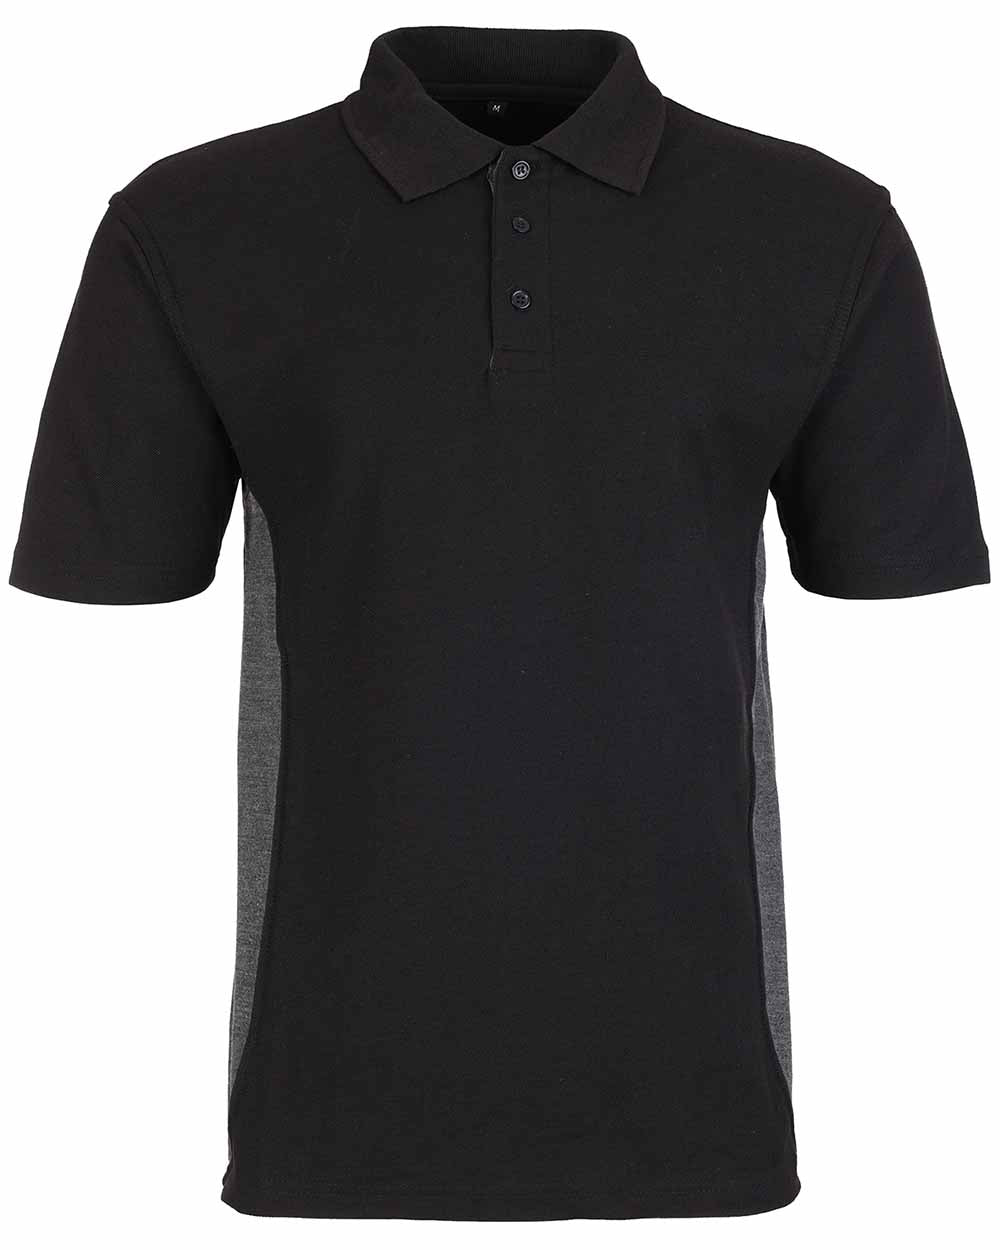 Tuffstuff Pro Work Polo Shirt in Black 